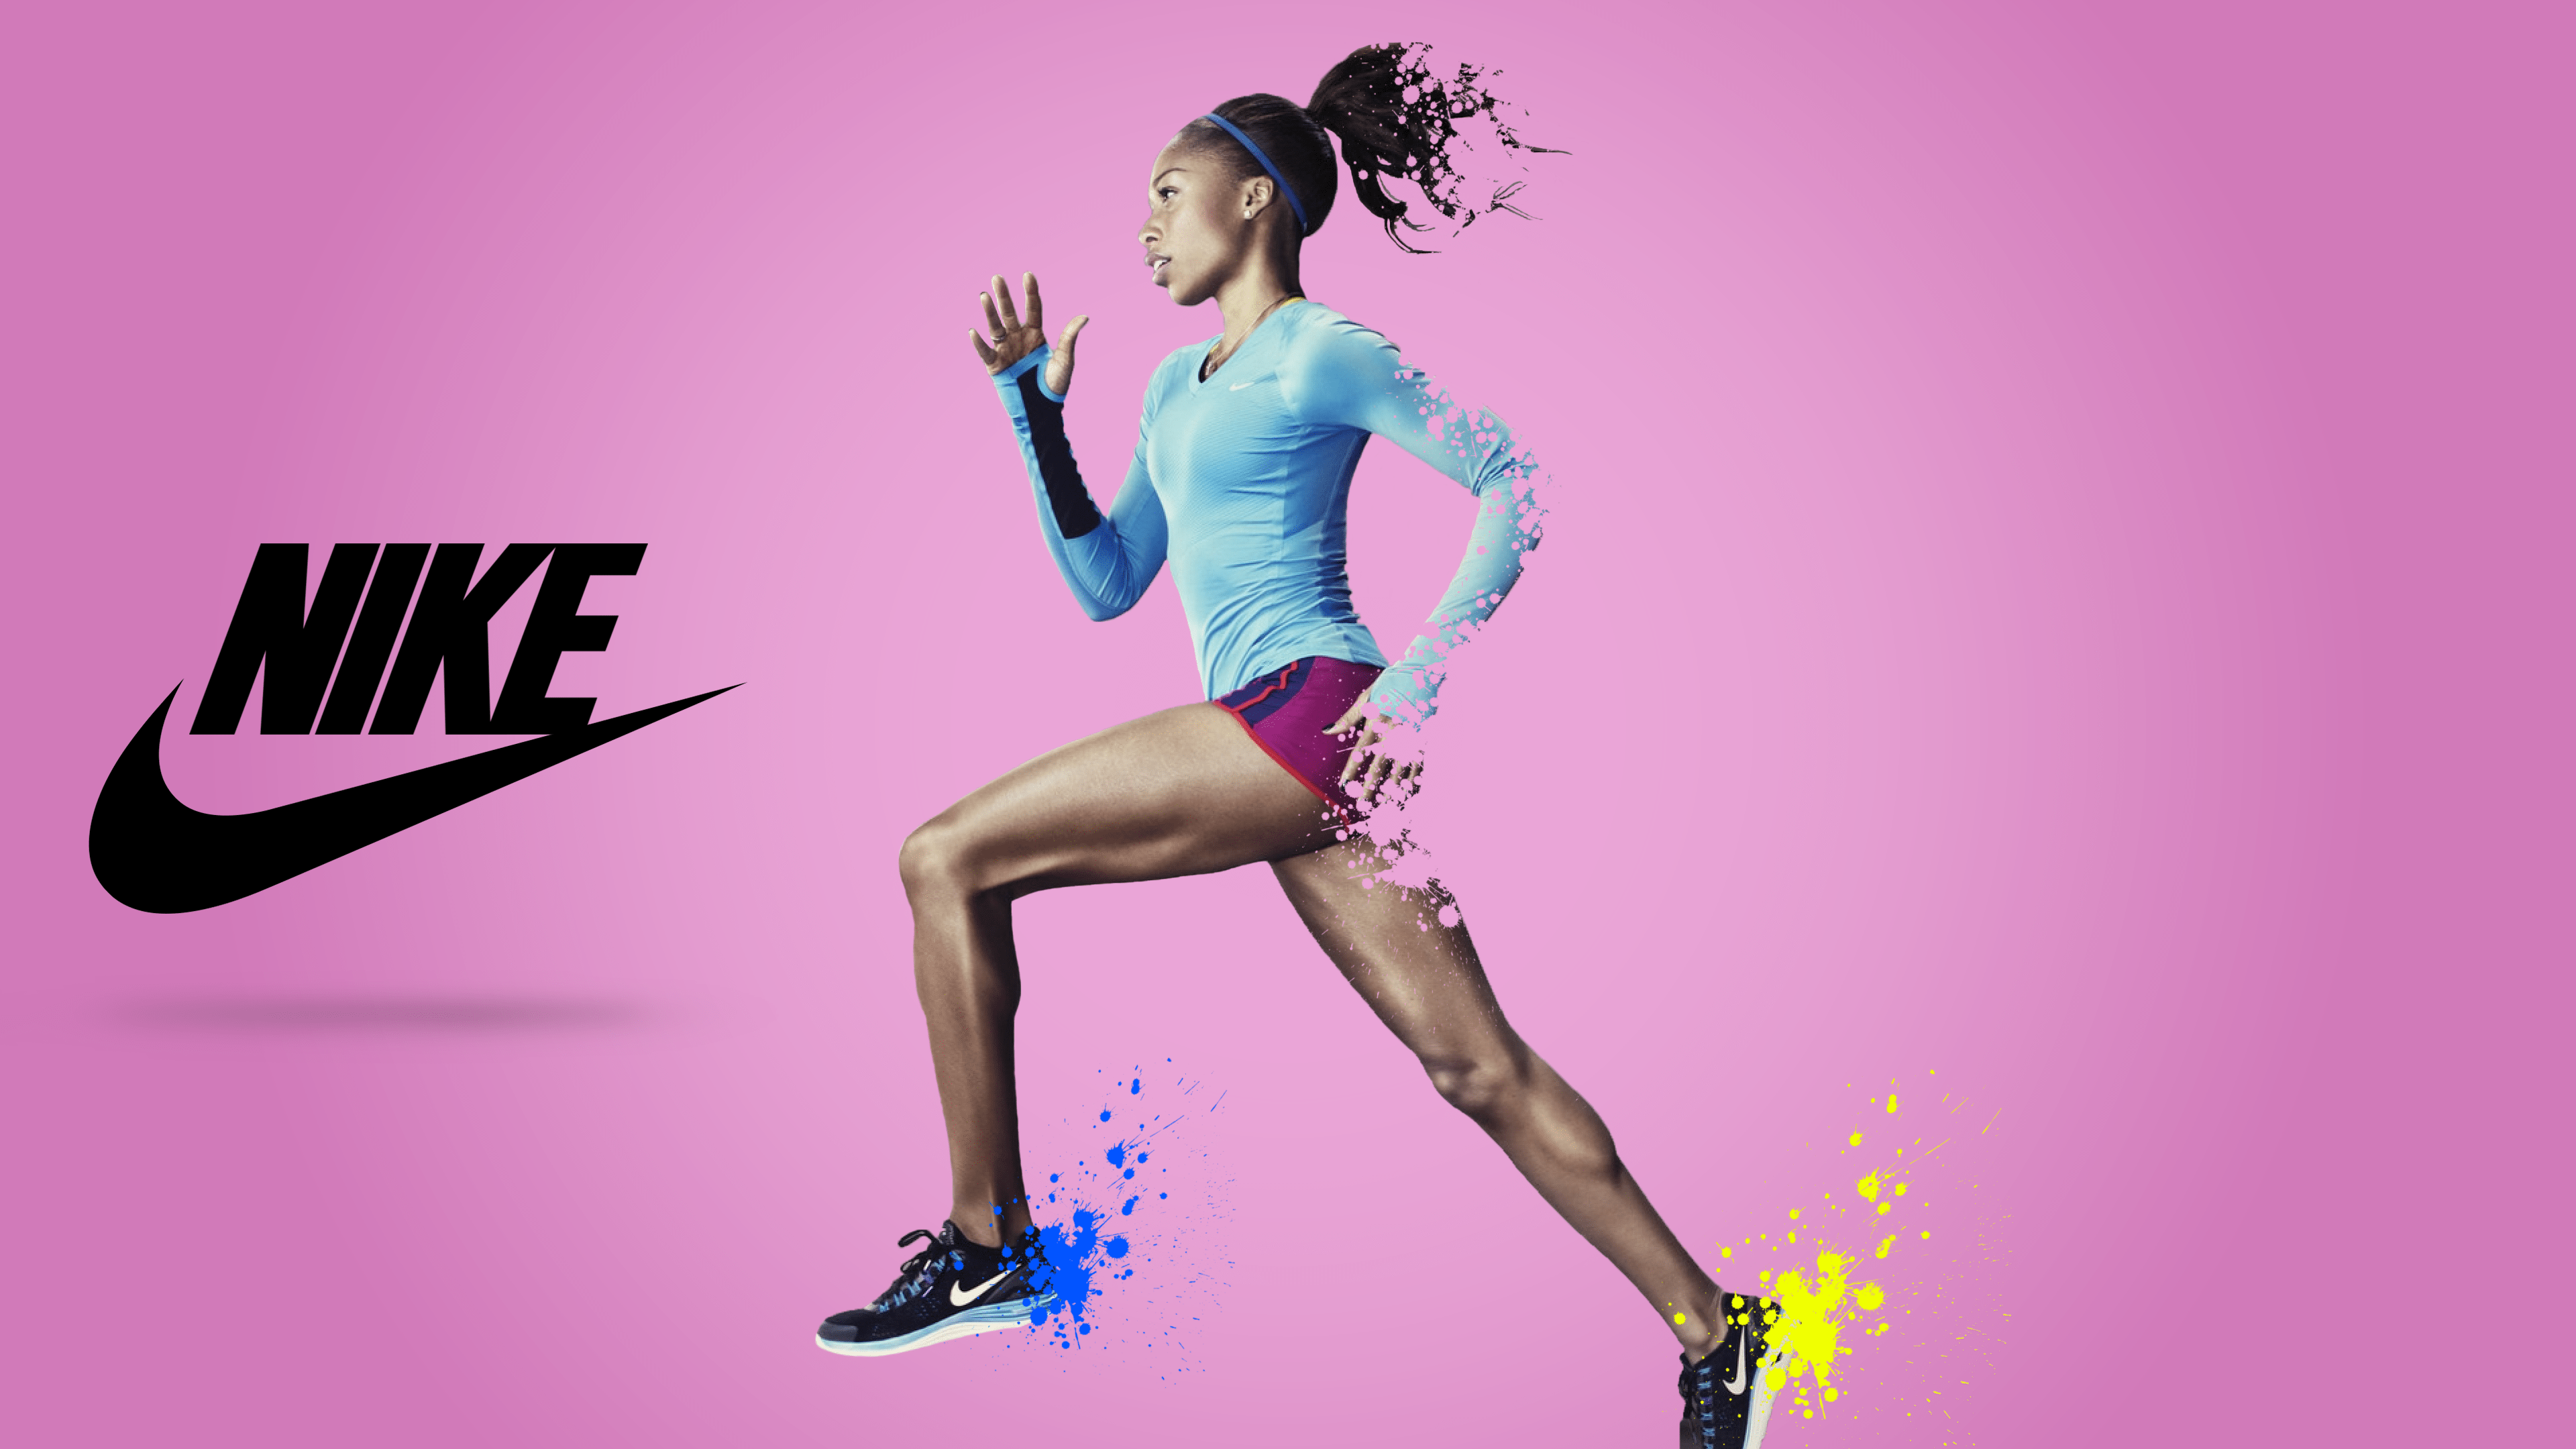 Nike Girl Wallpapers - Top Free Nike Girl Backgrounds - WallpaperAccess